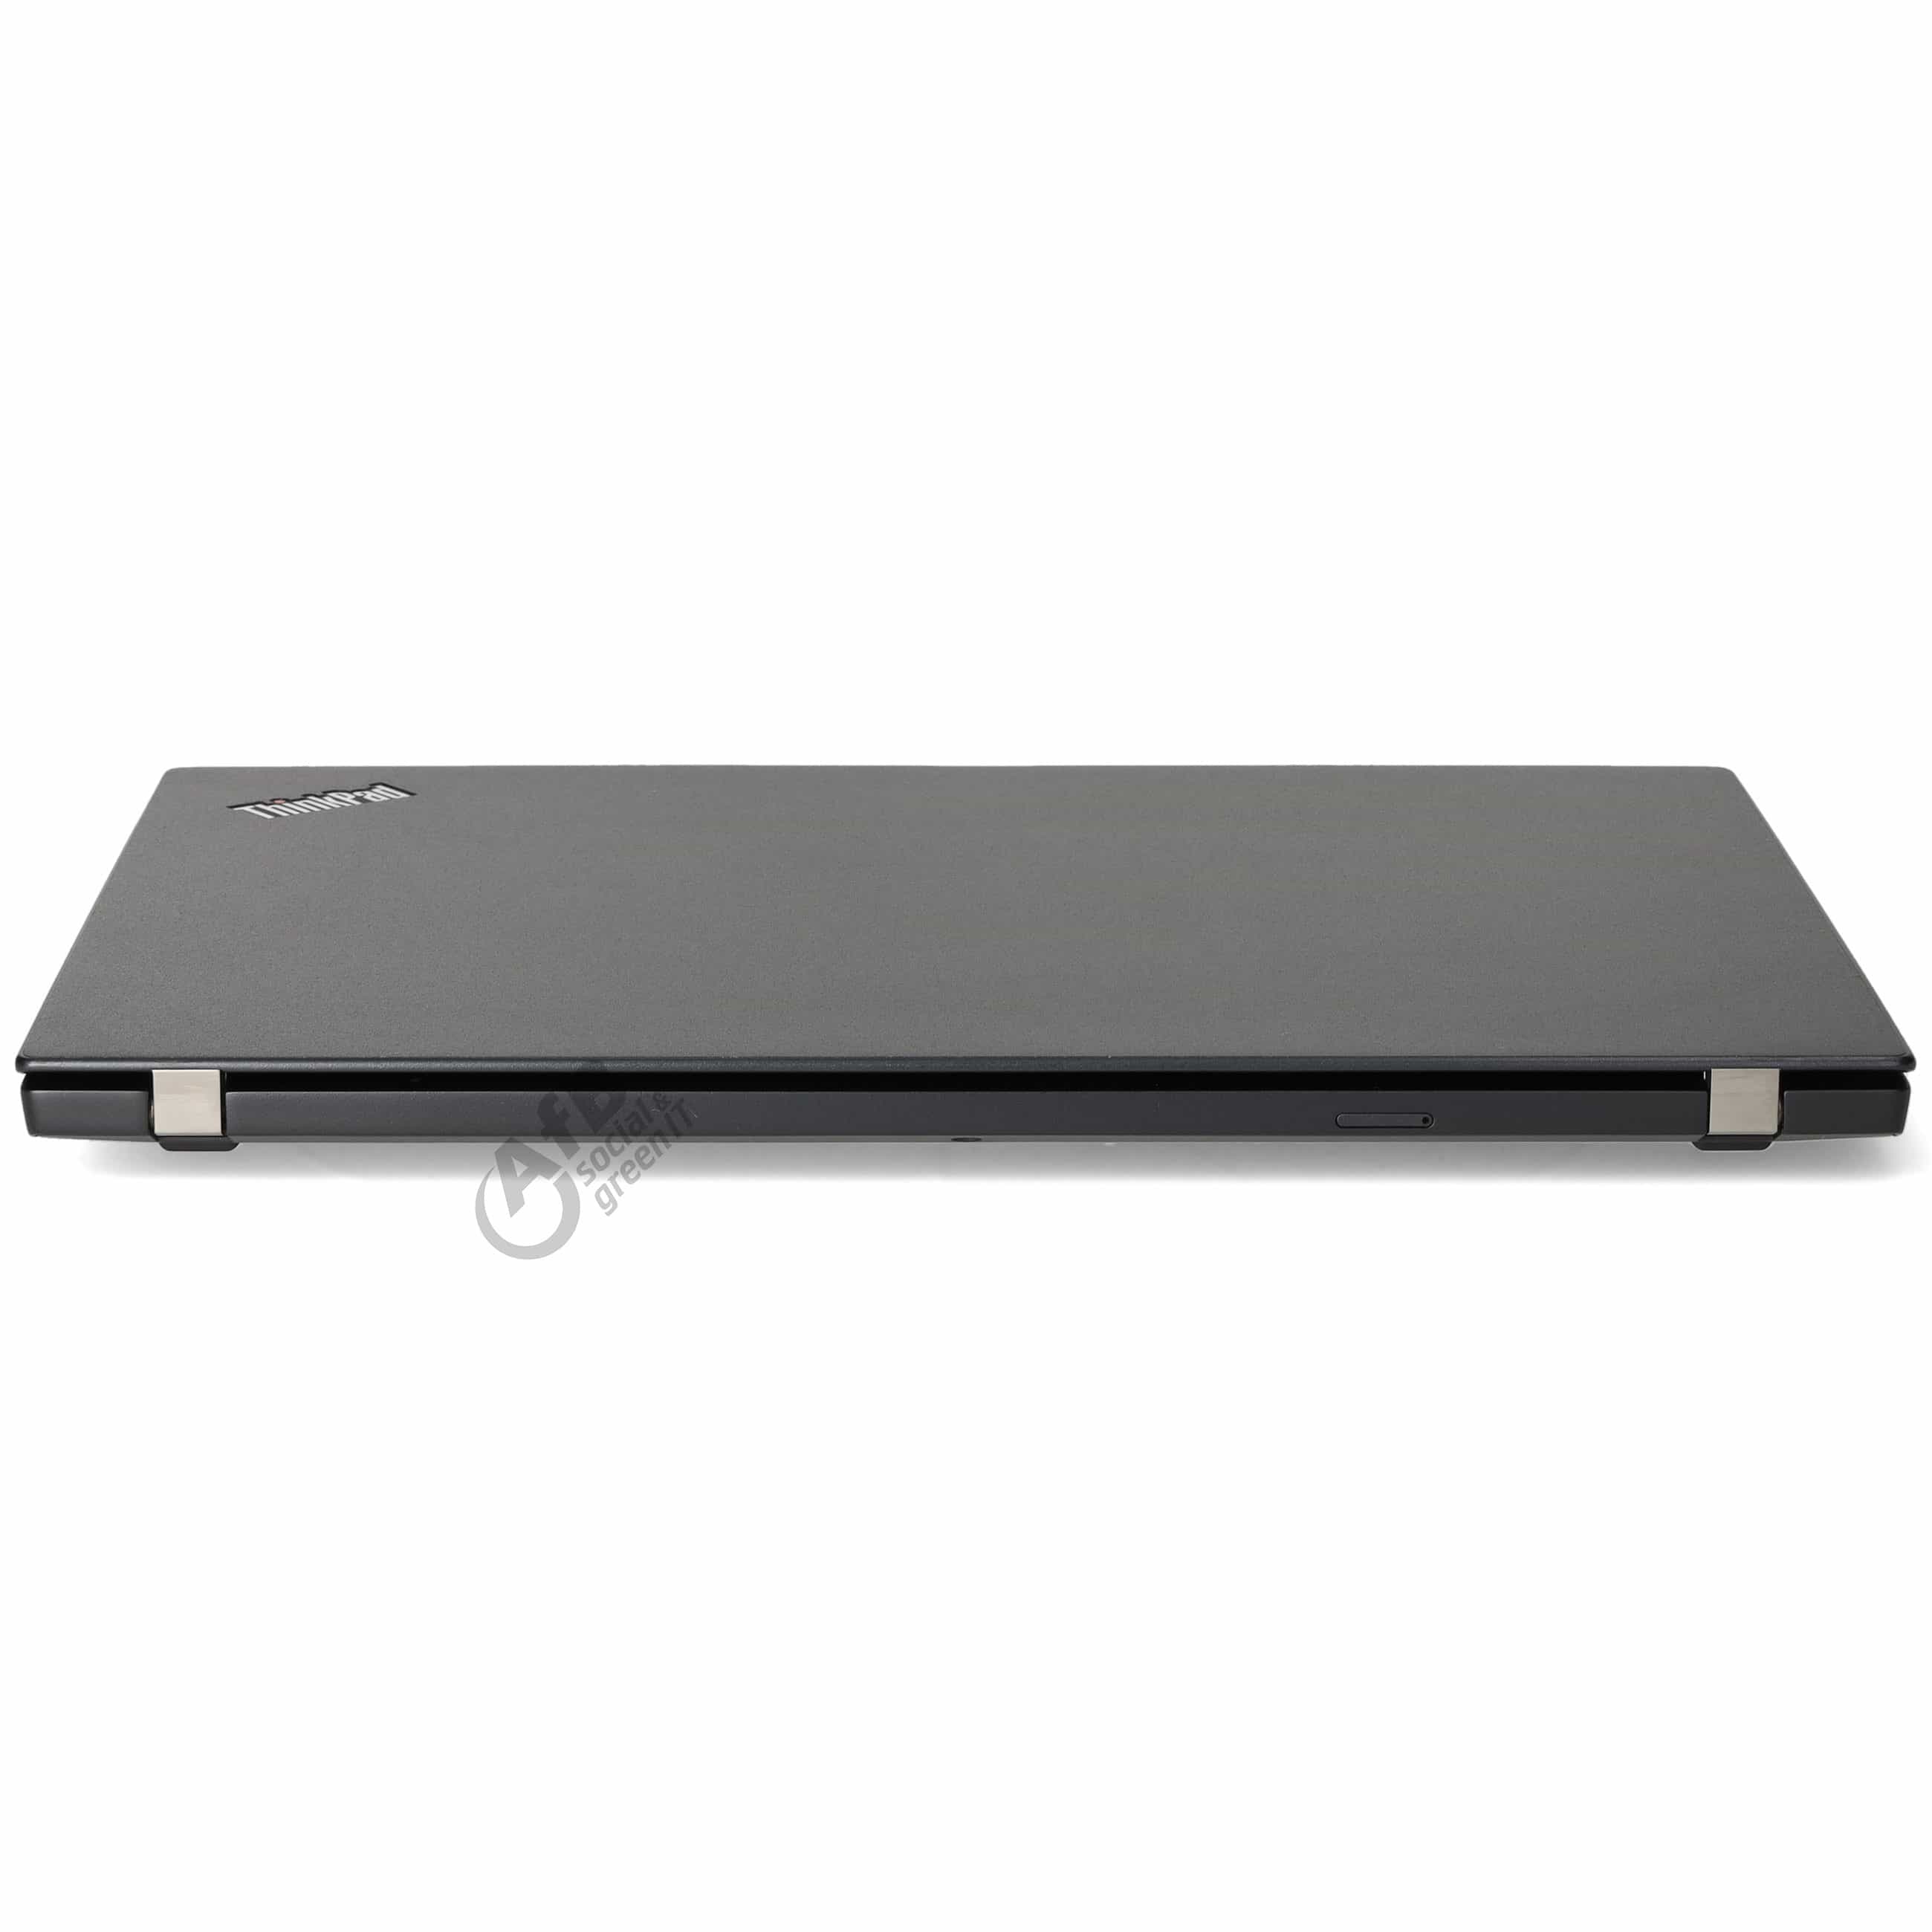 Lenovo ThinkPad T480 

 - 14,0 Zoll - Intel Core i5 8350U @ 1,7 GHz - 8 GB DDR4 - 500 GB SSD - 1920 x 1080 FHD - Windows 10 Professional